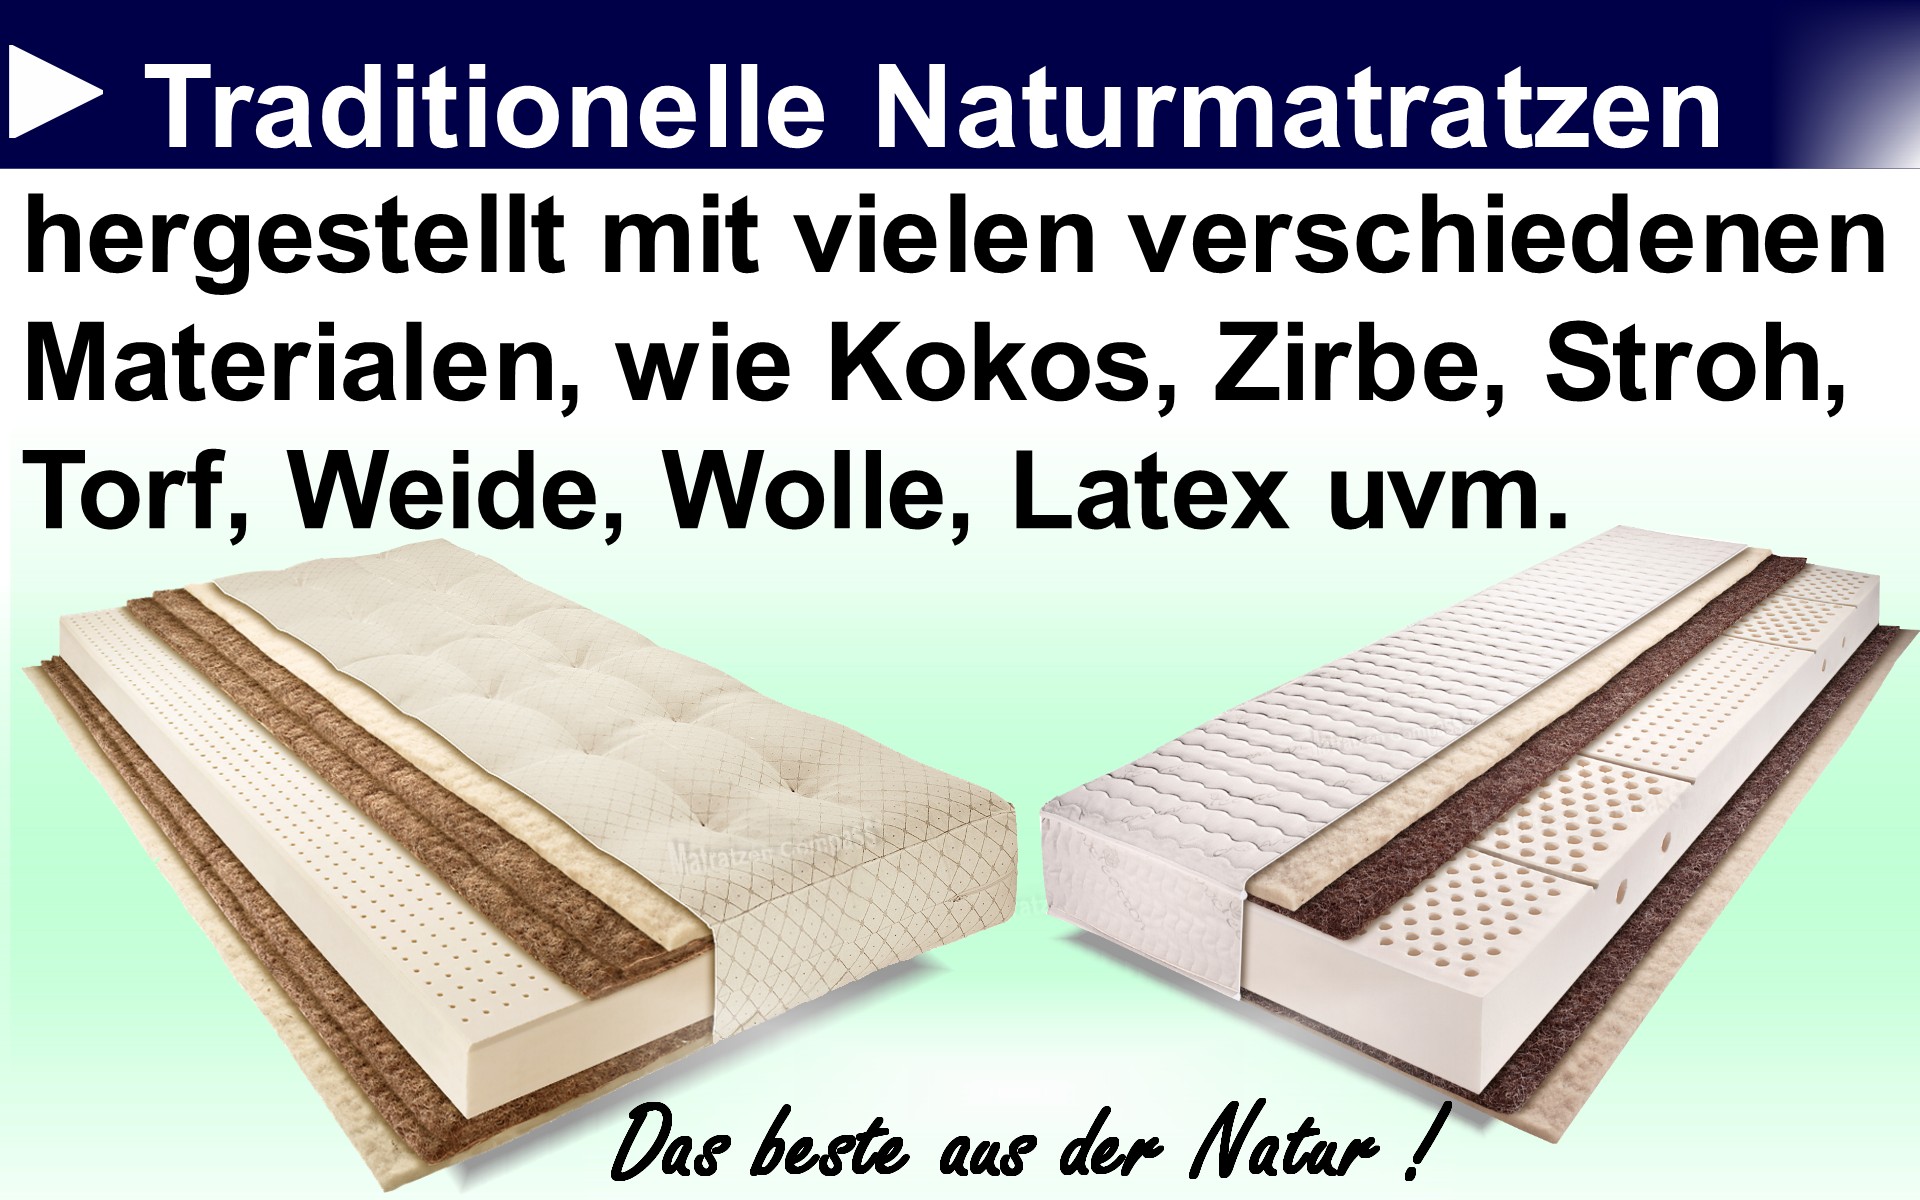 Naturmatratzen-Compass-Kokos-Latex-Zirbe-Stroh-Torf-Naturmatratzen-Pro-Natura-Naturmatrratzen-Berlin